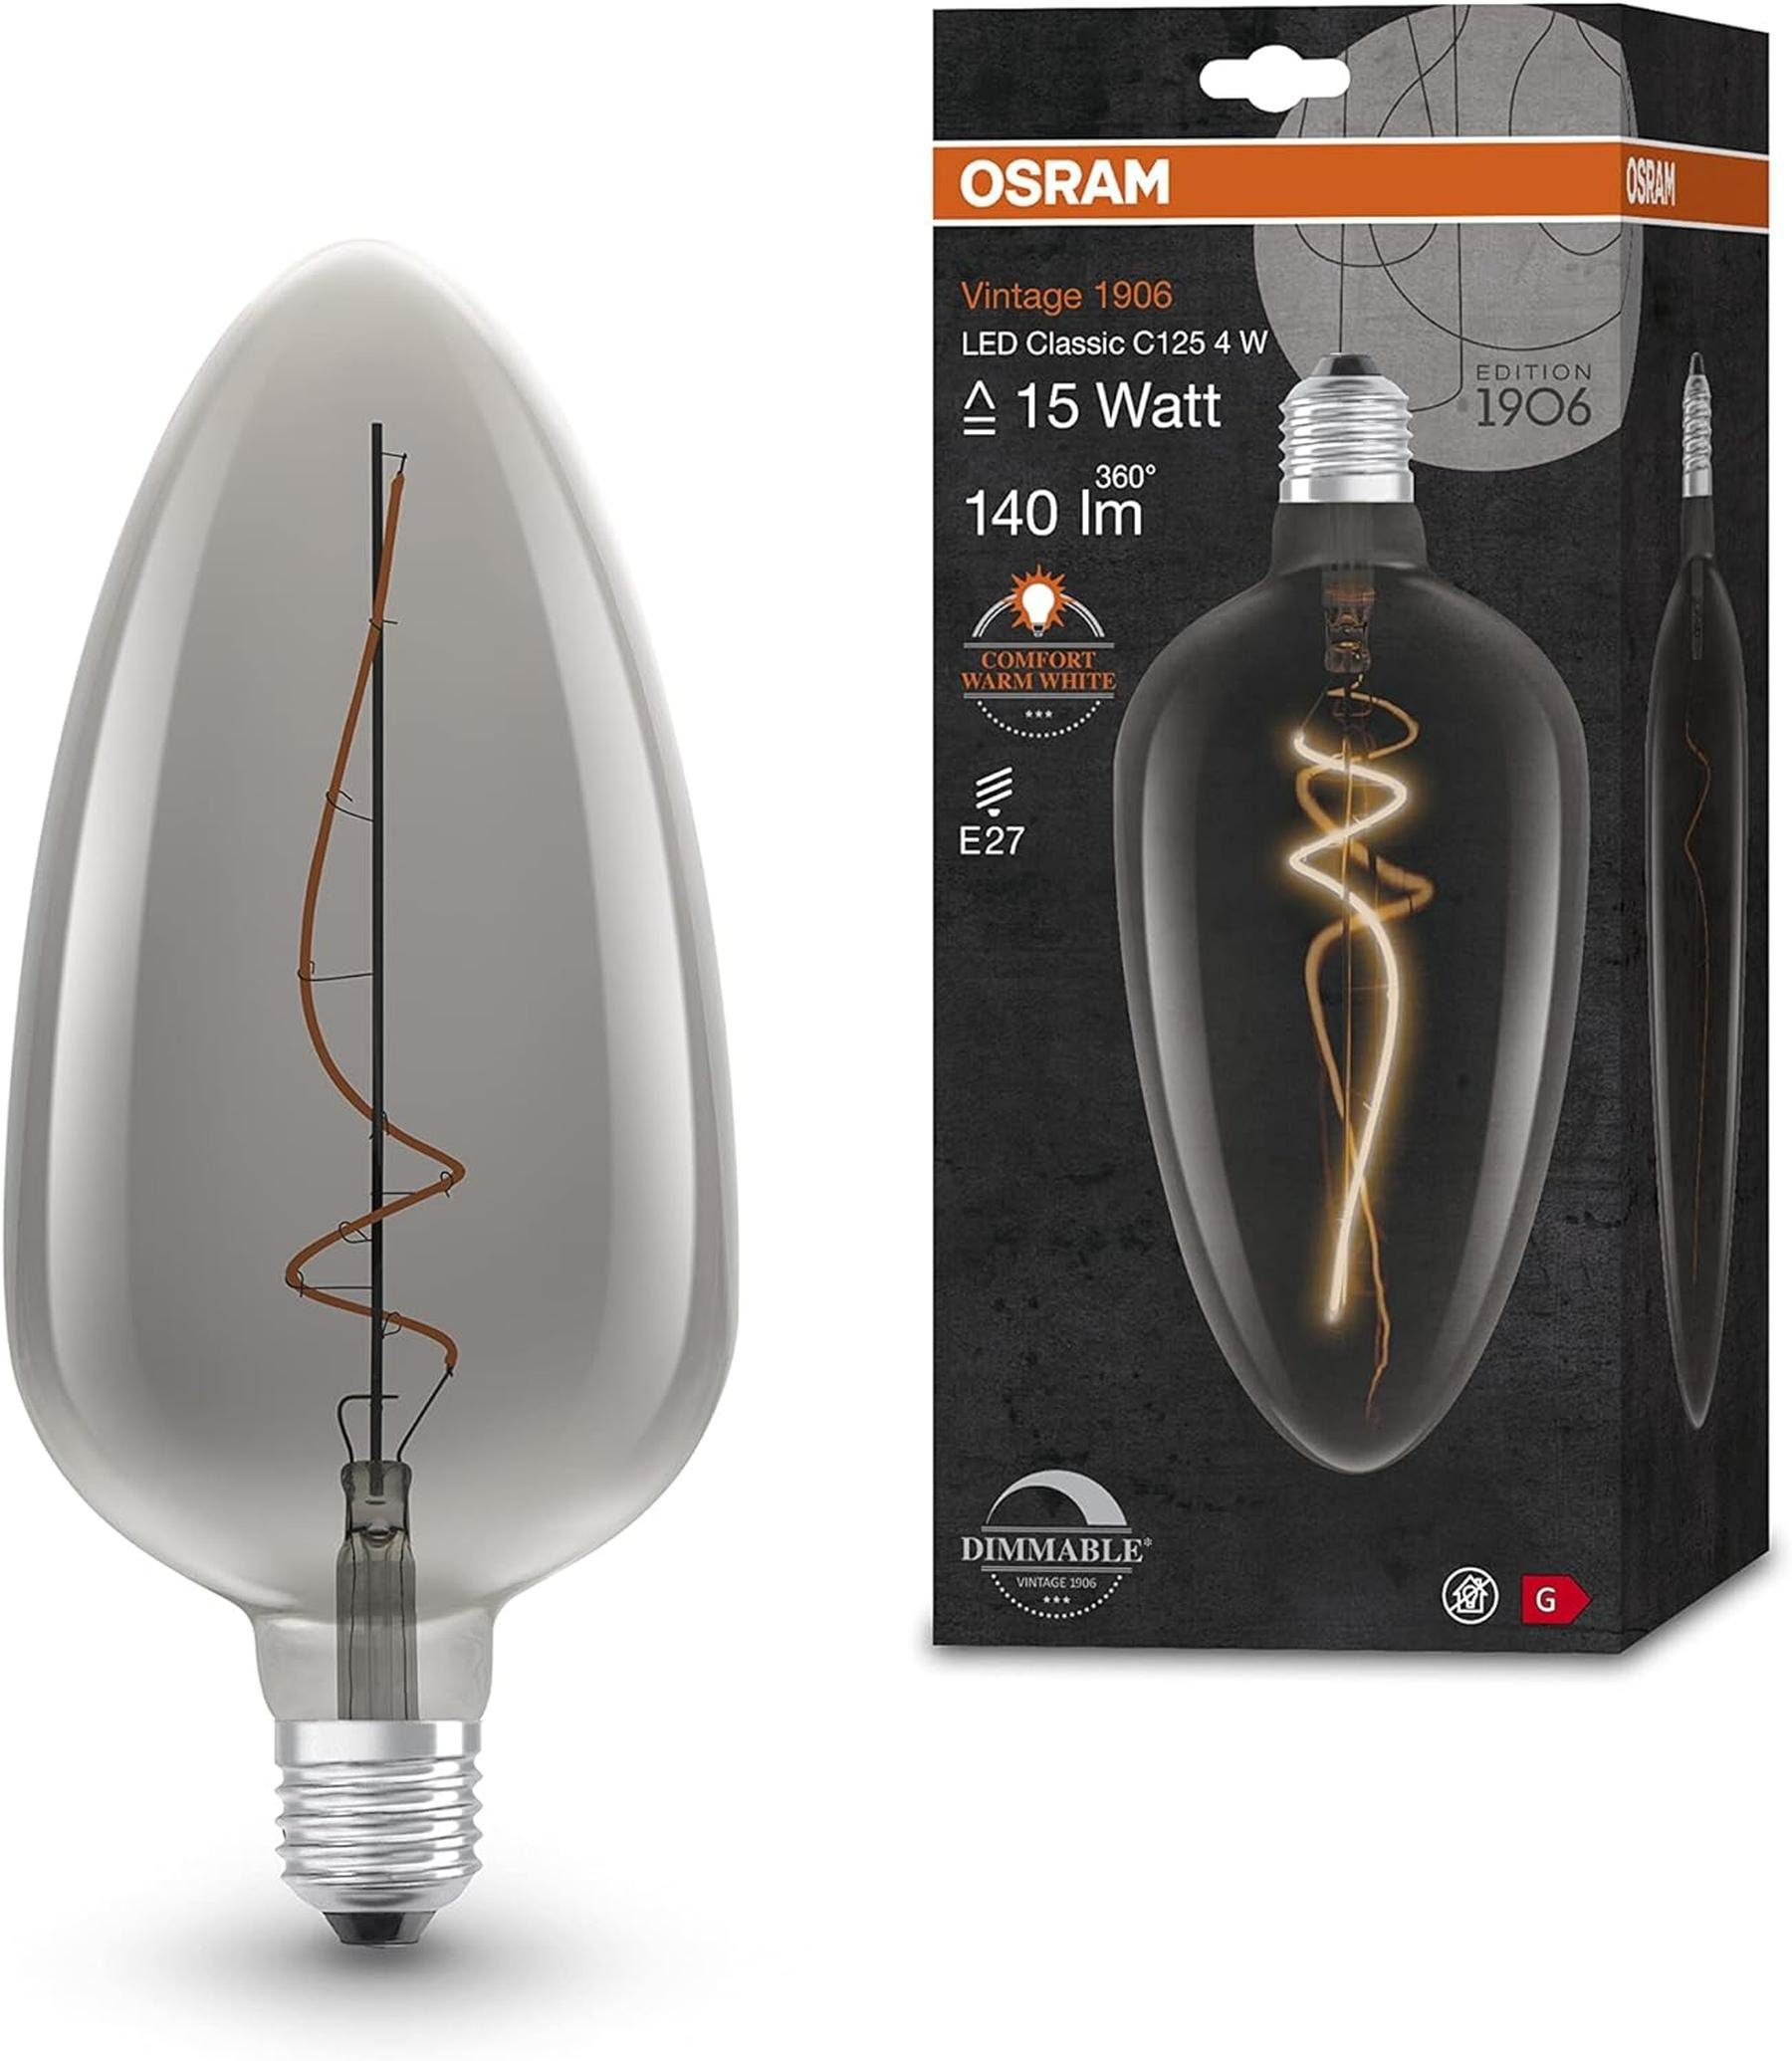 Osram LED-Leuchtmittel OSRAM Lamps Vintage 1906 LED-Lampe Smoke-Tönung,4W,140lm e27